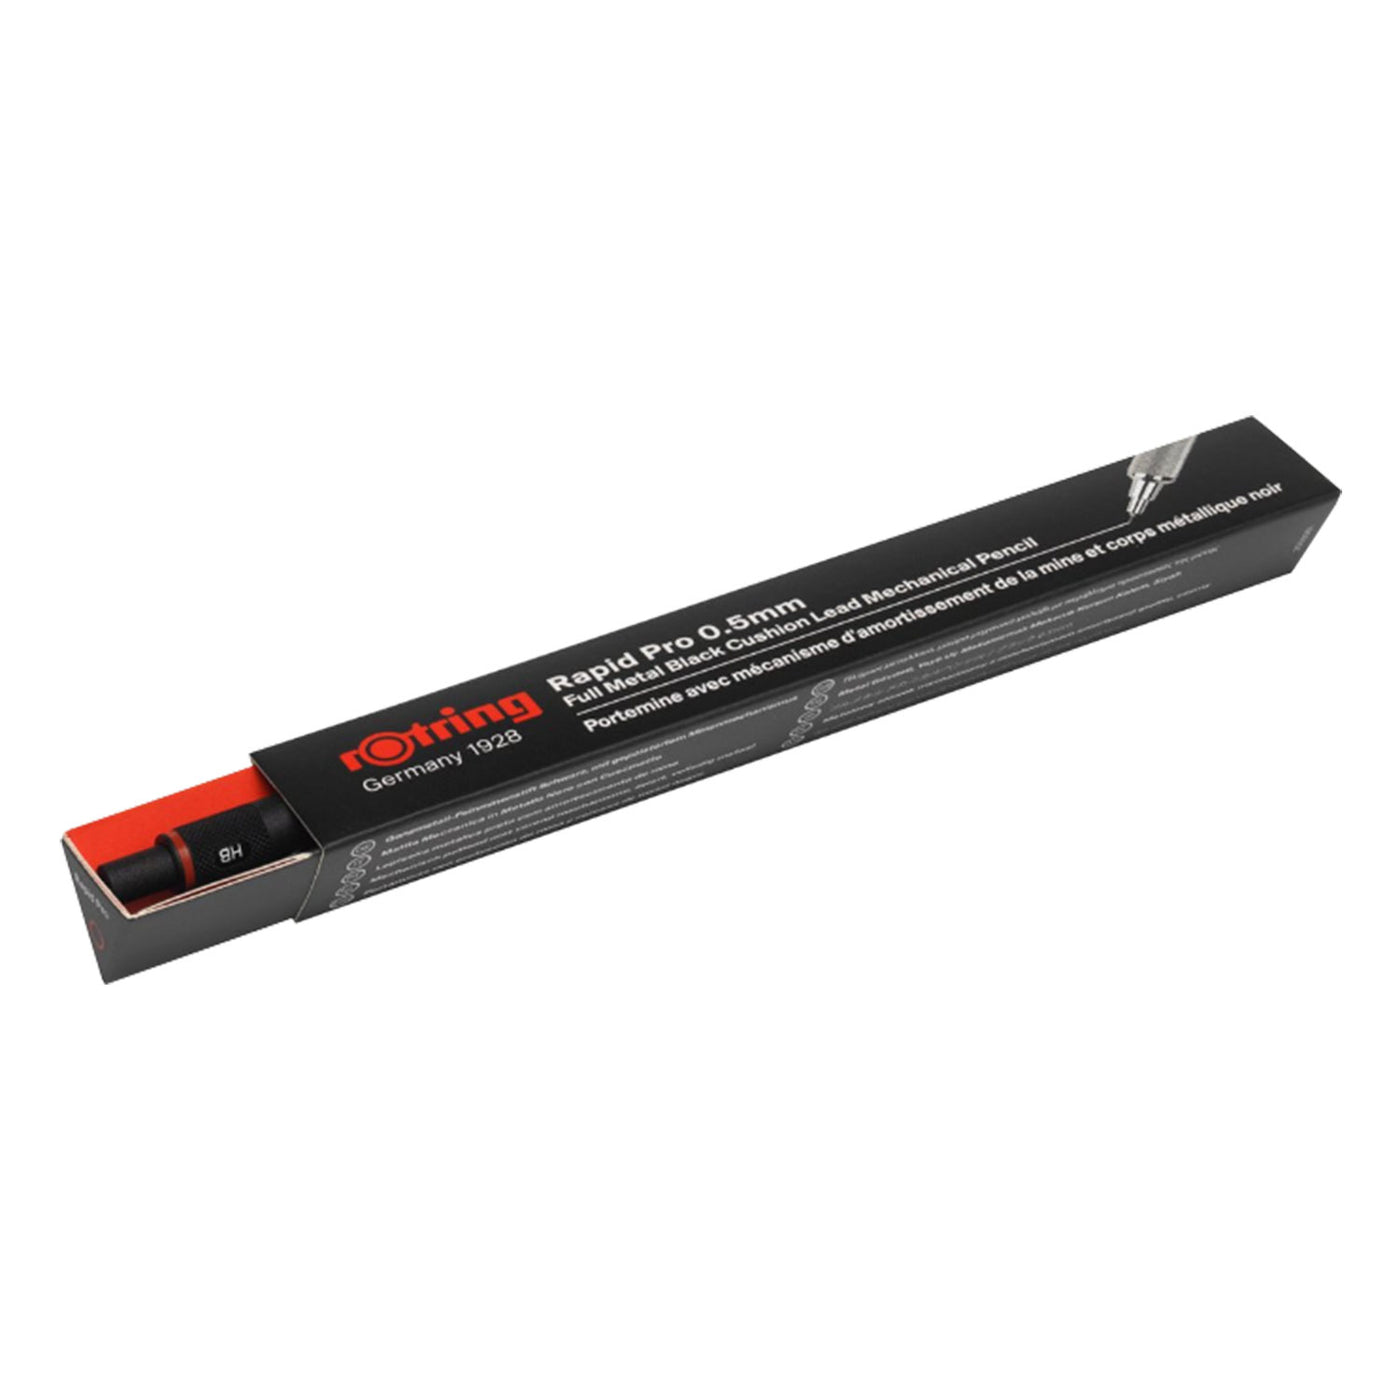 Rotring Rapid Pro 0.5mm Mechanical Pencil - Black 6